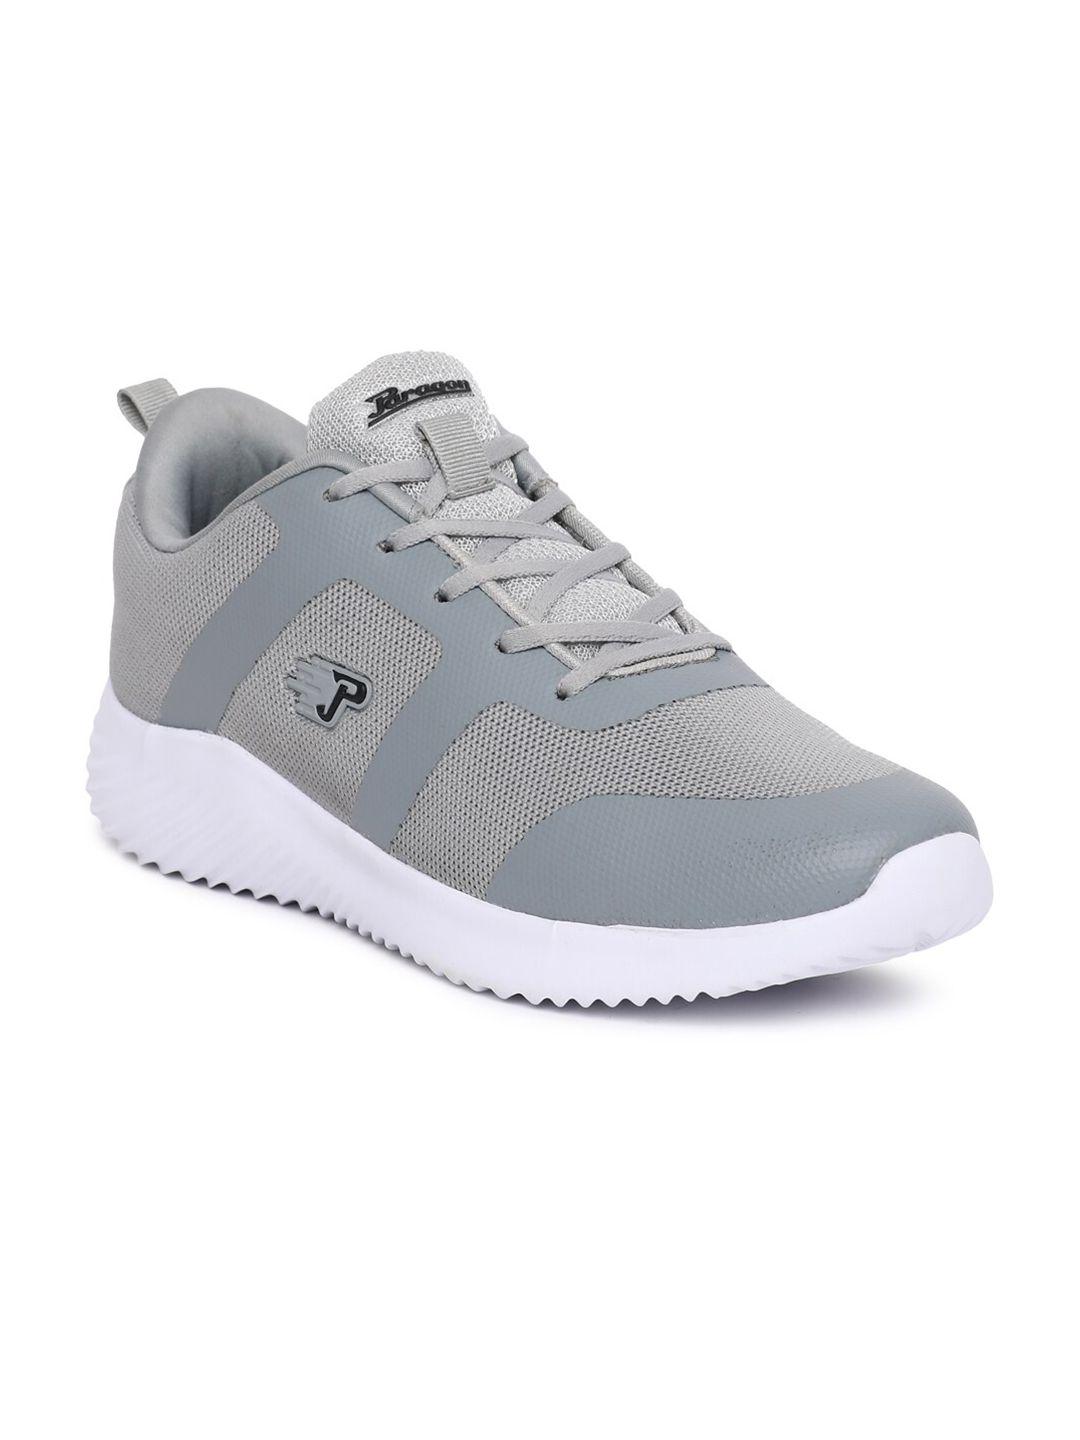 Paragon Men Grey Textile Running Sports Shoes